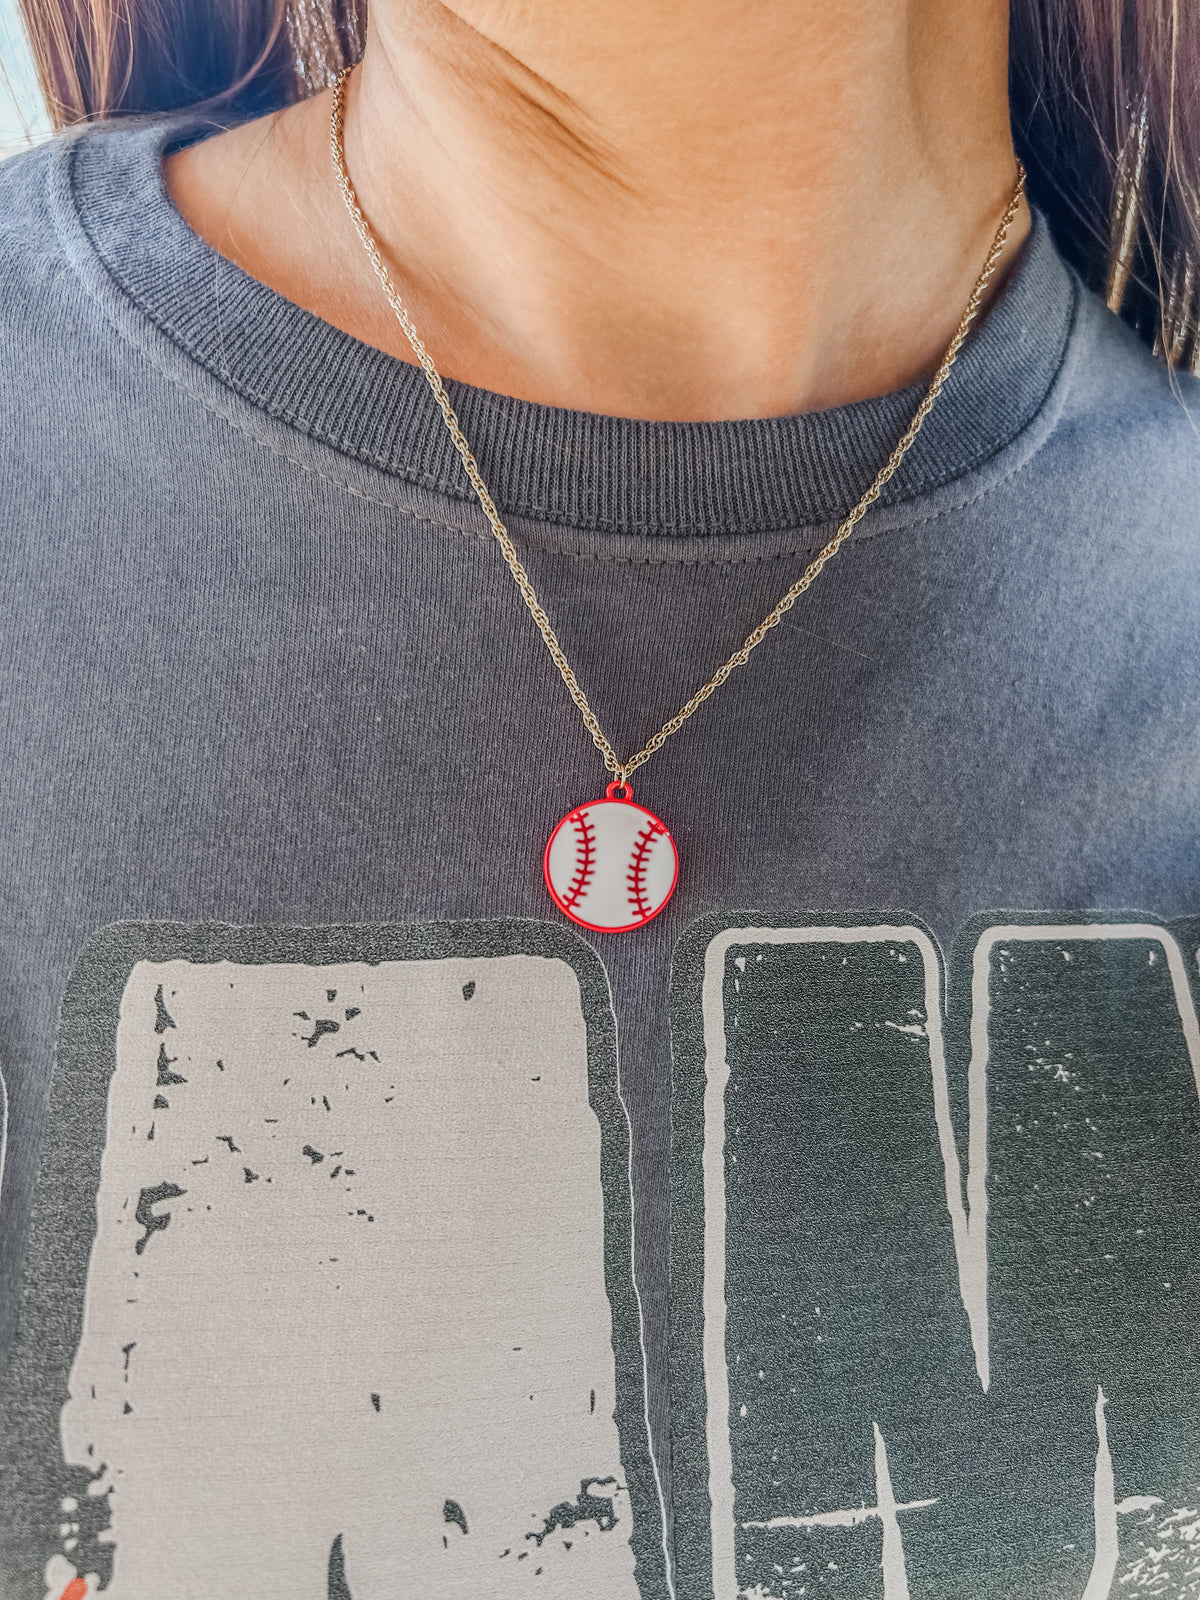 3 Strikes Baseball Necklace • Gold